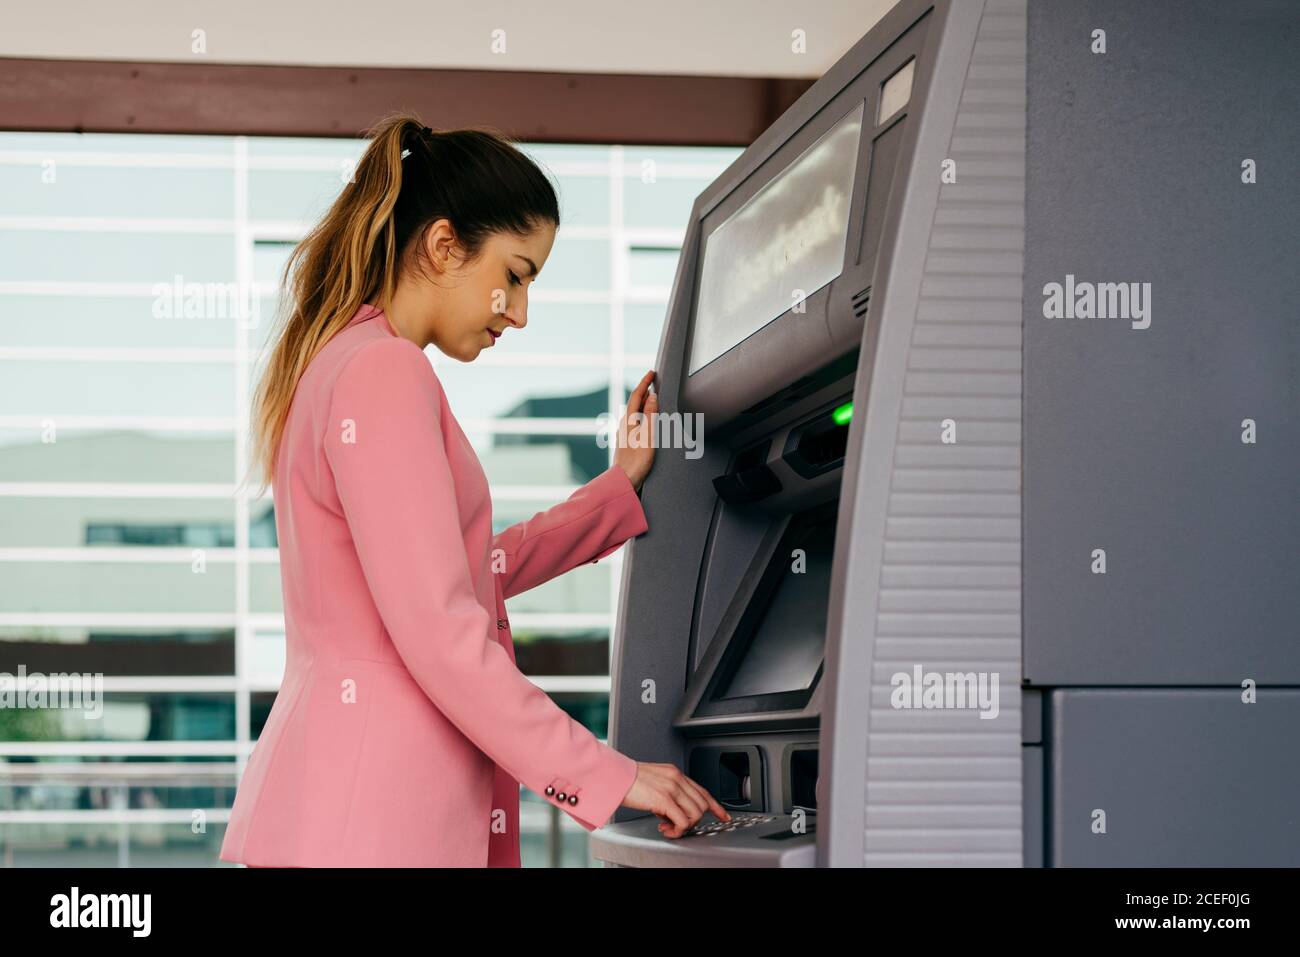 Crop Woman using ATM machine Stock Photo